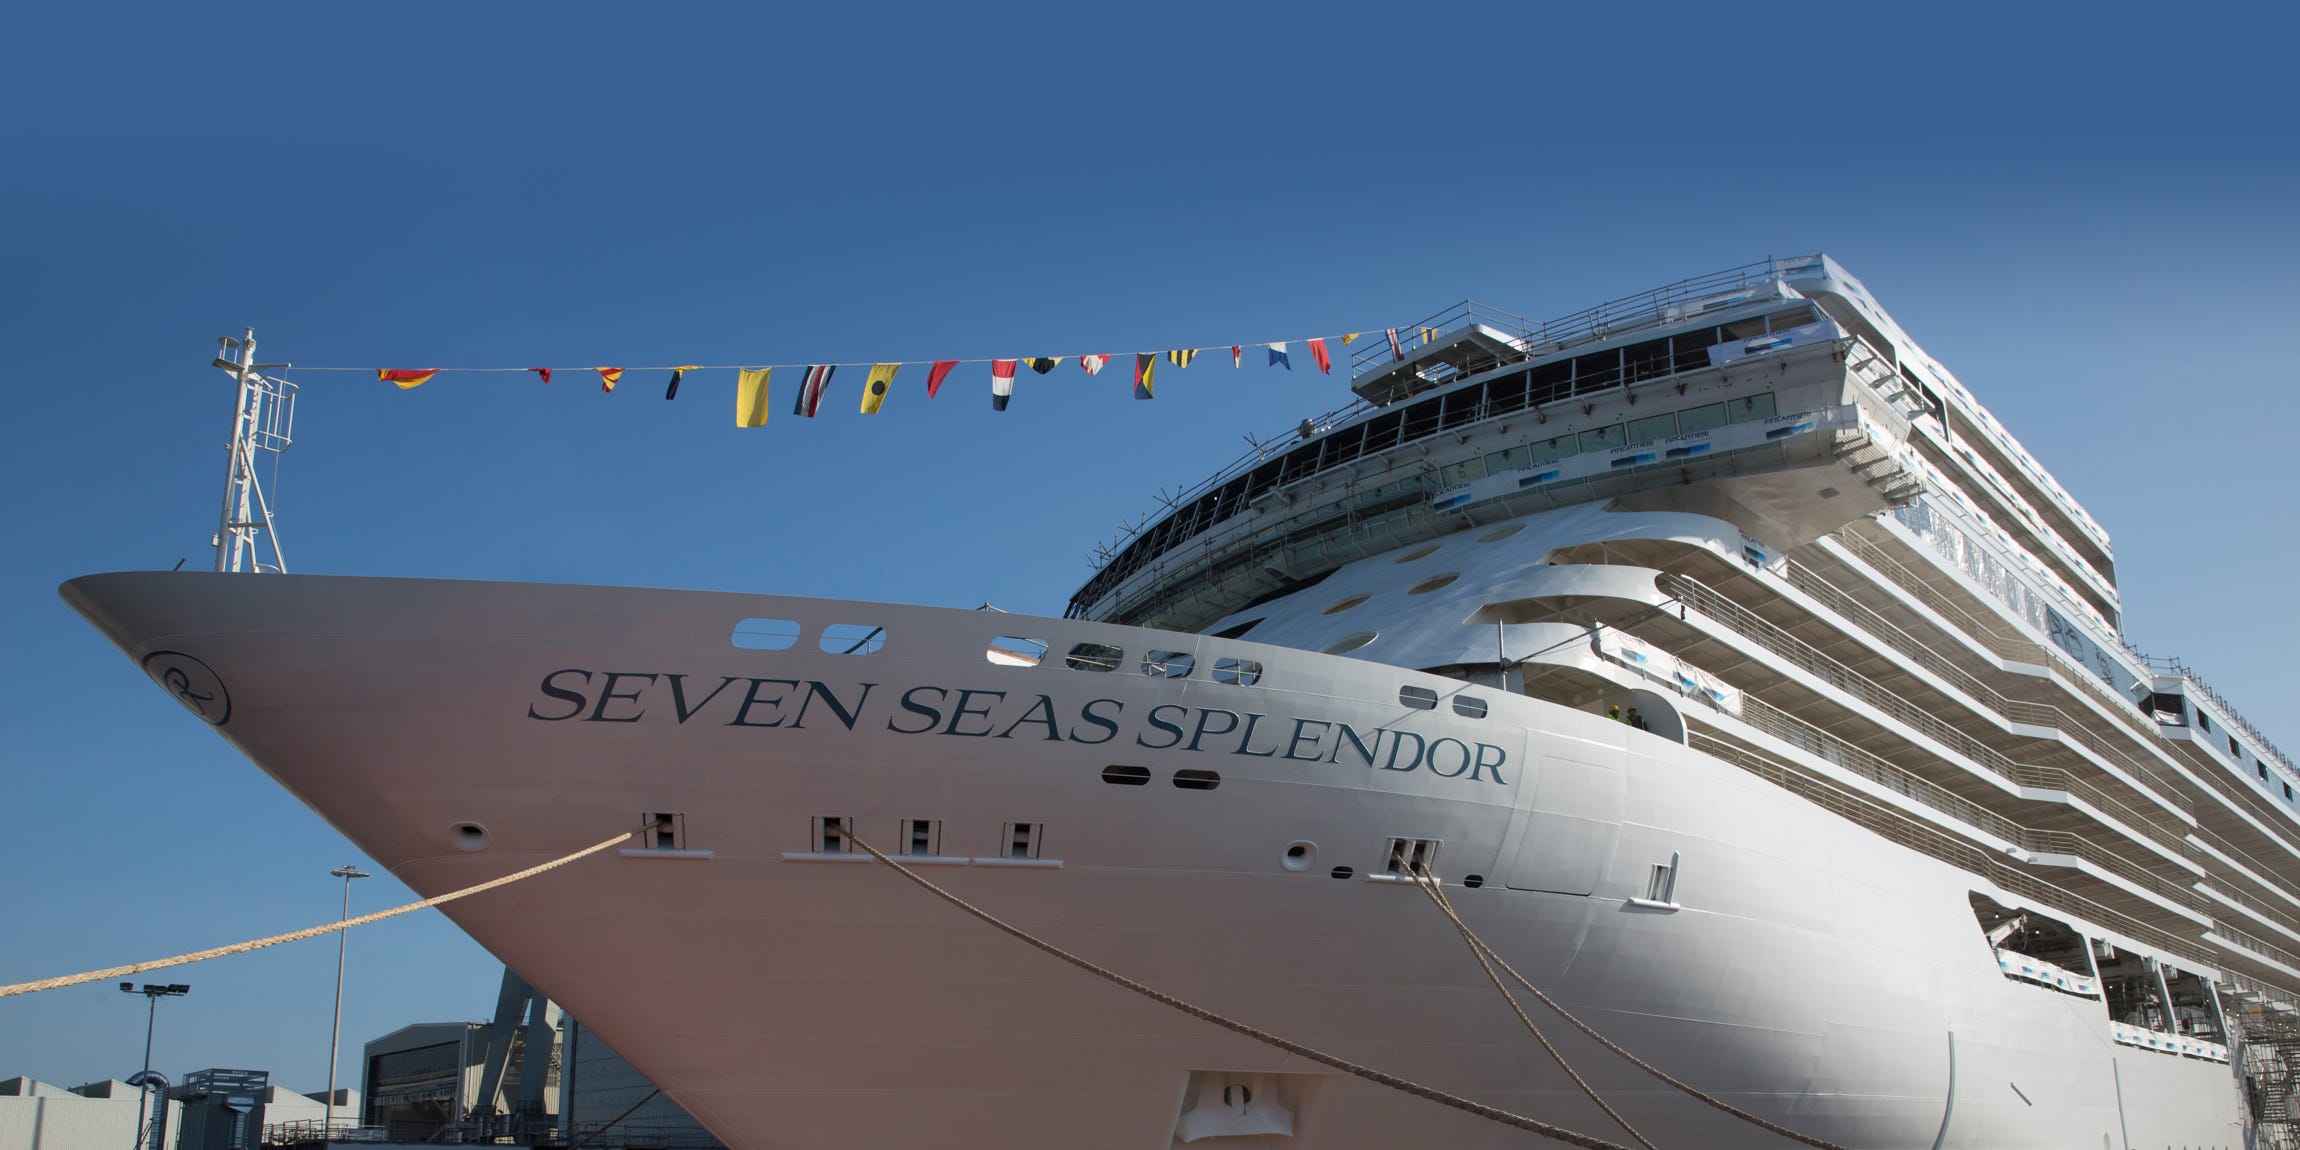 Exterior of the Seven Seas Splendor